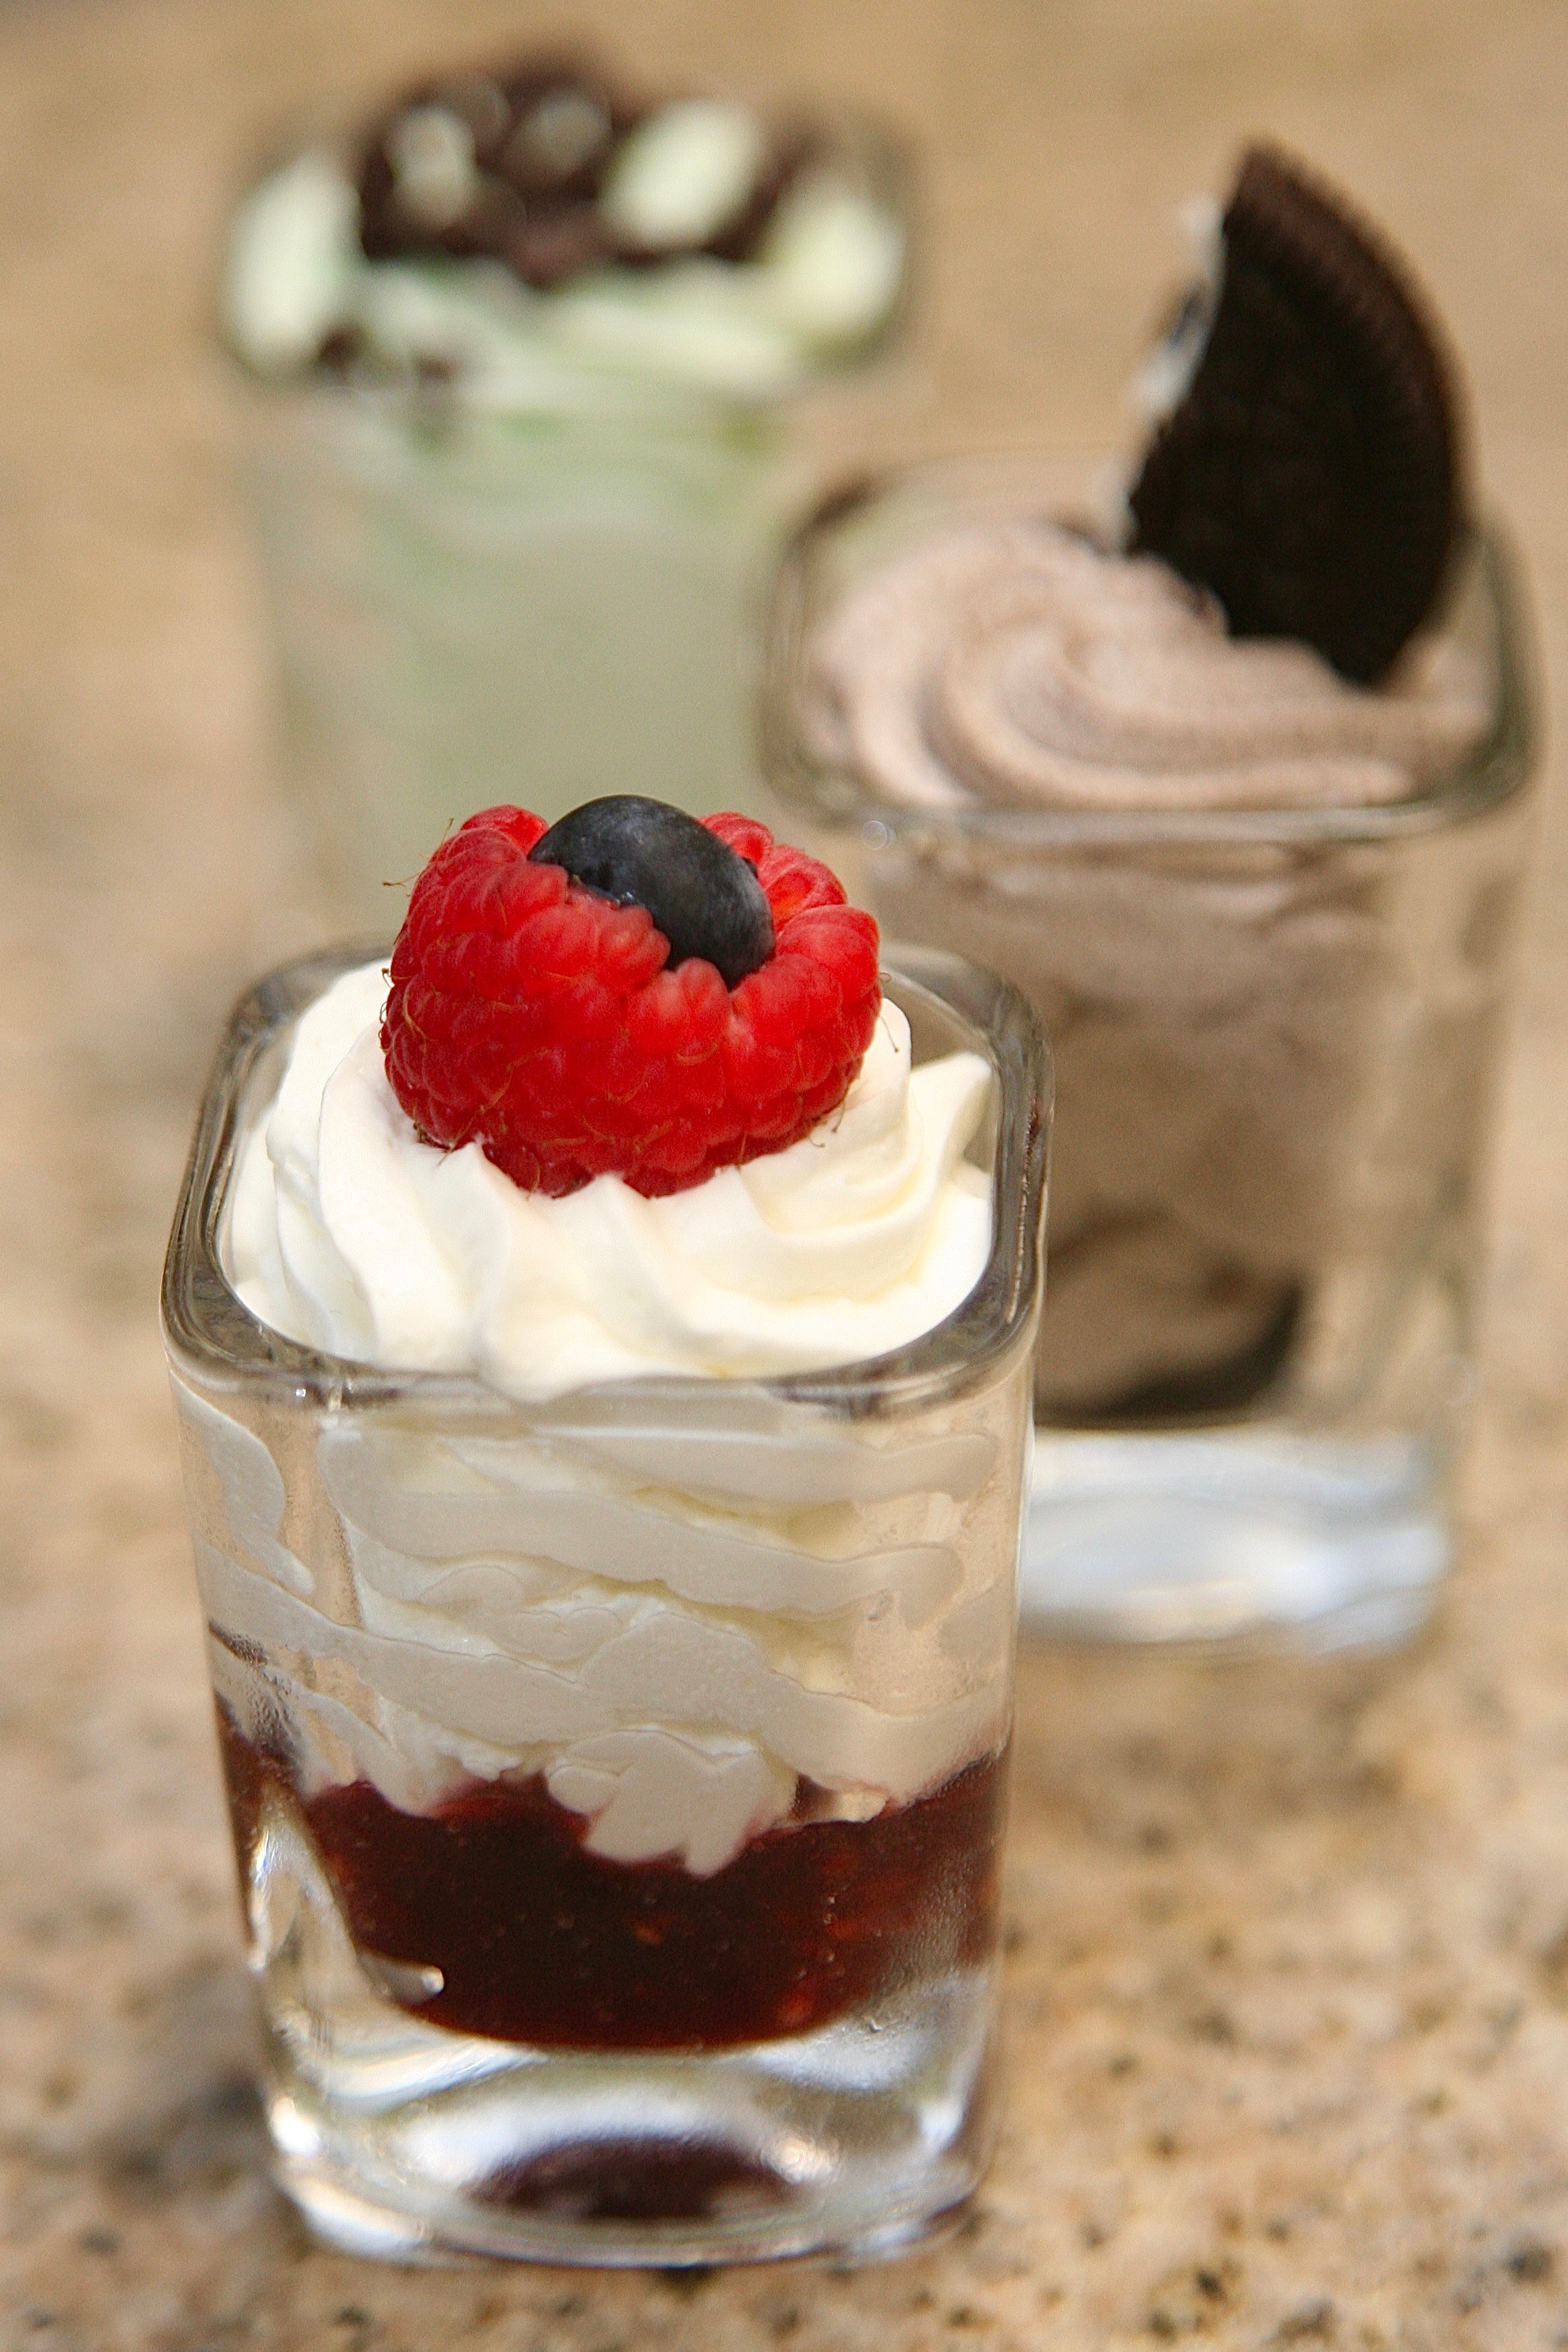 orlando catering - Dessert in shot glass